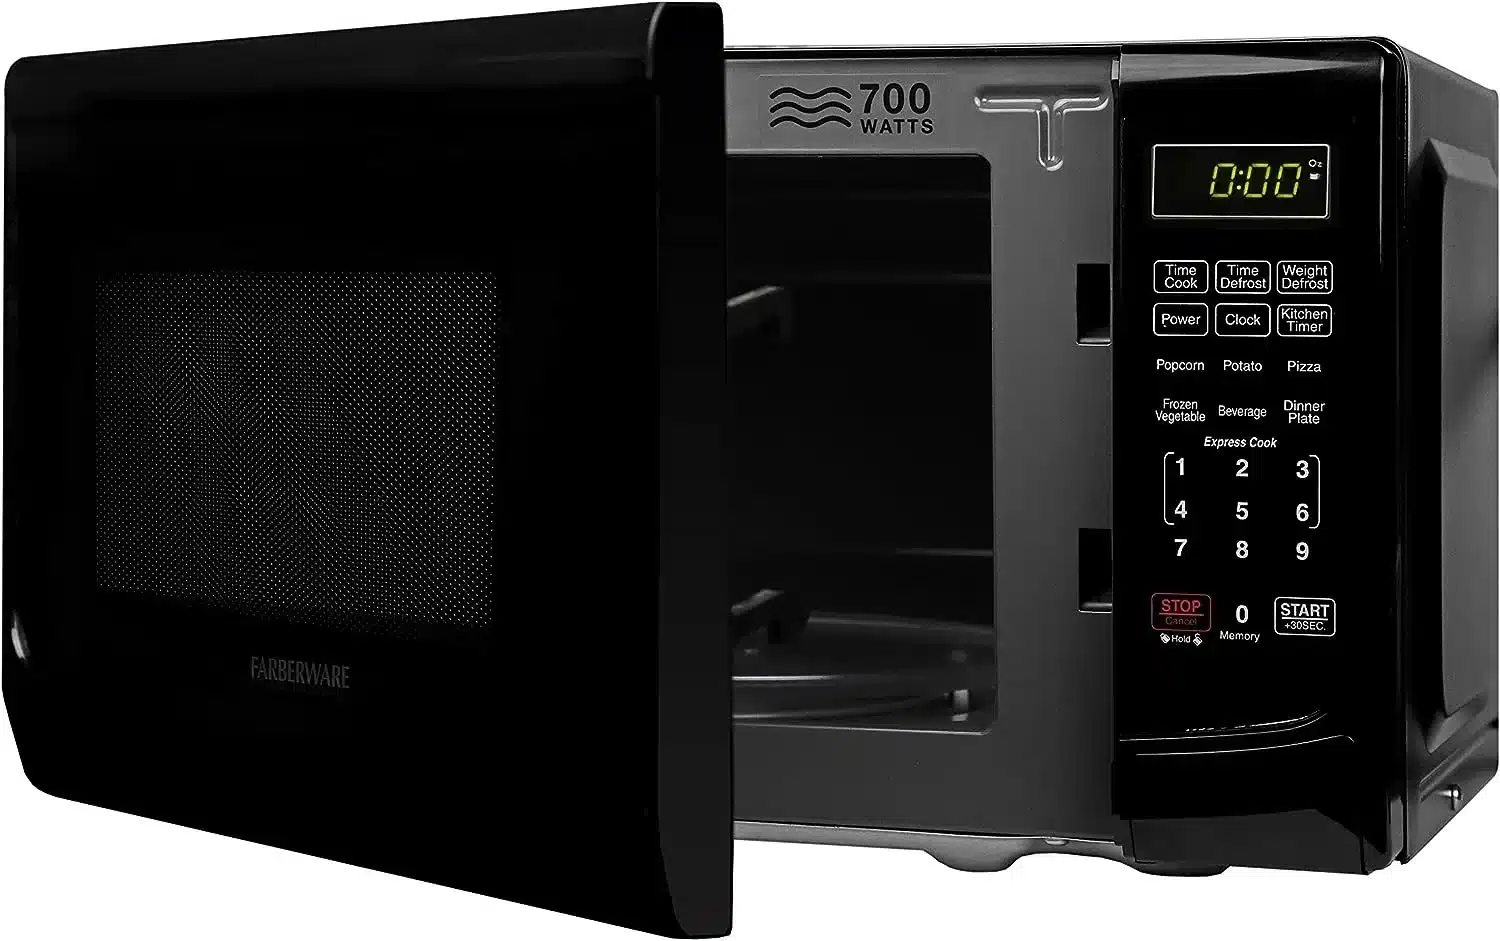 microwave-keeps-blowing-fuse-solved